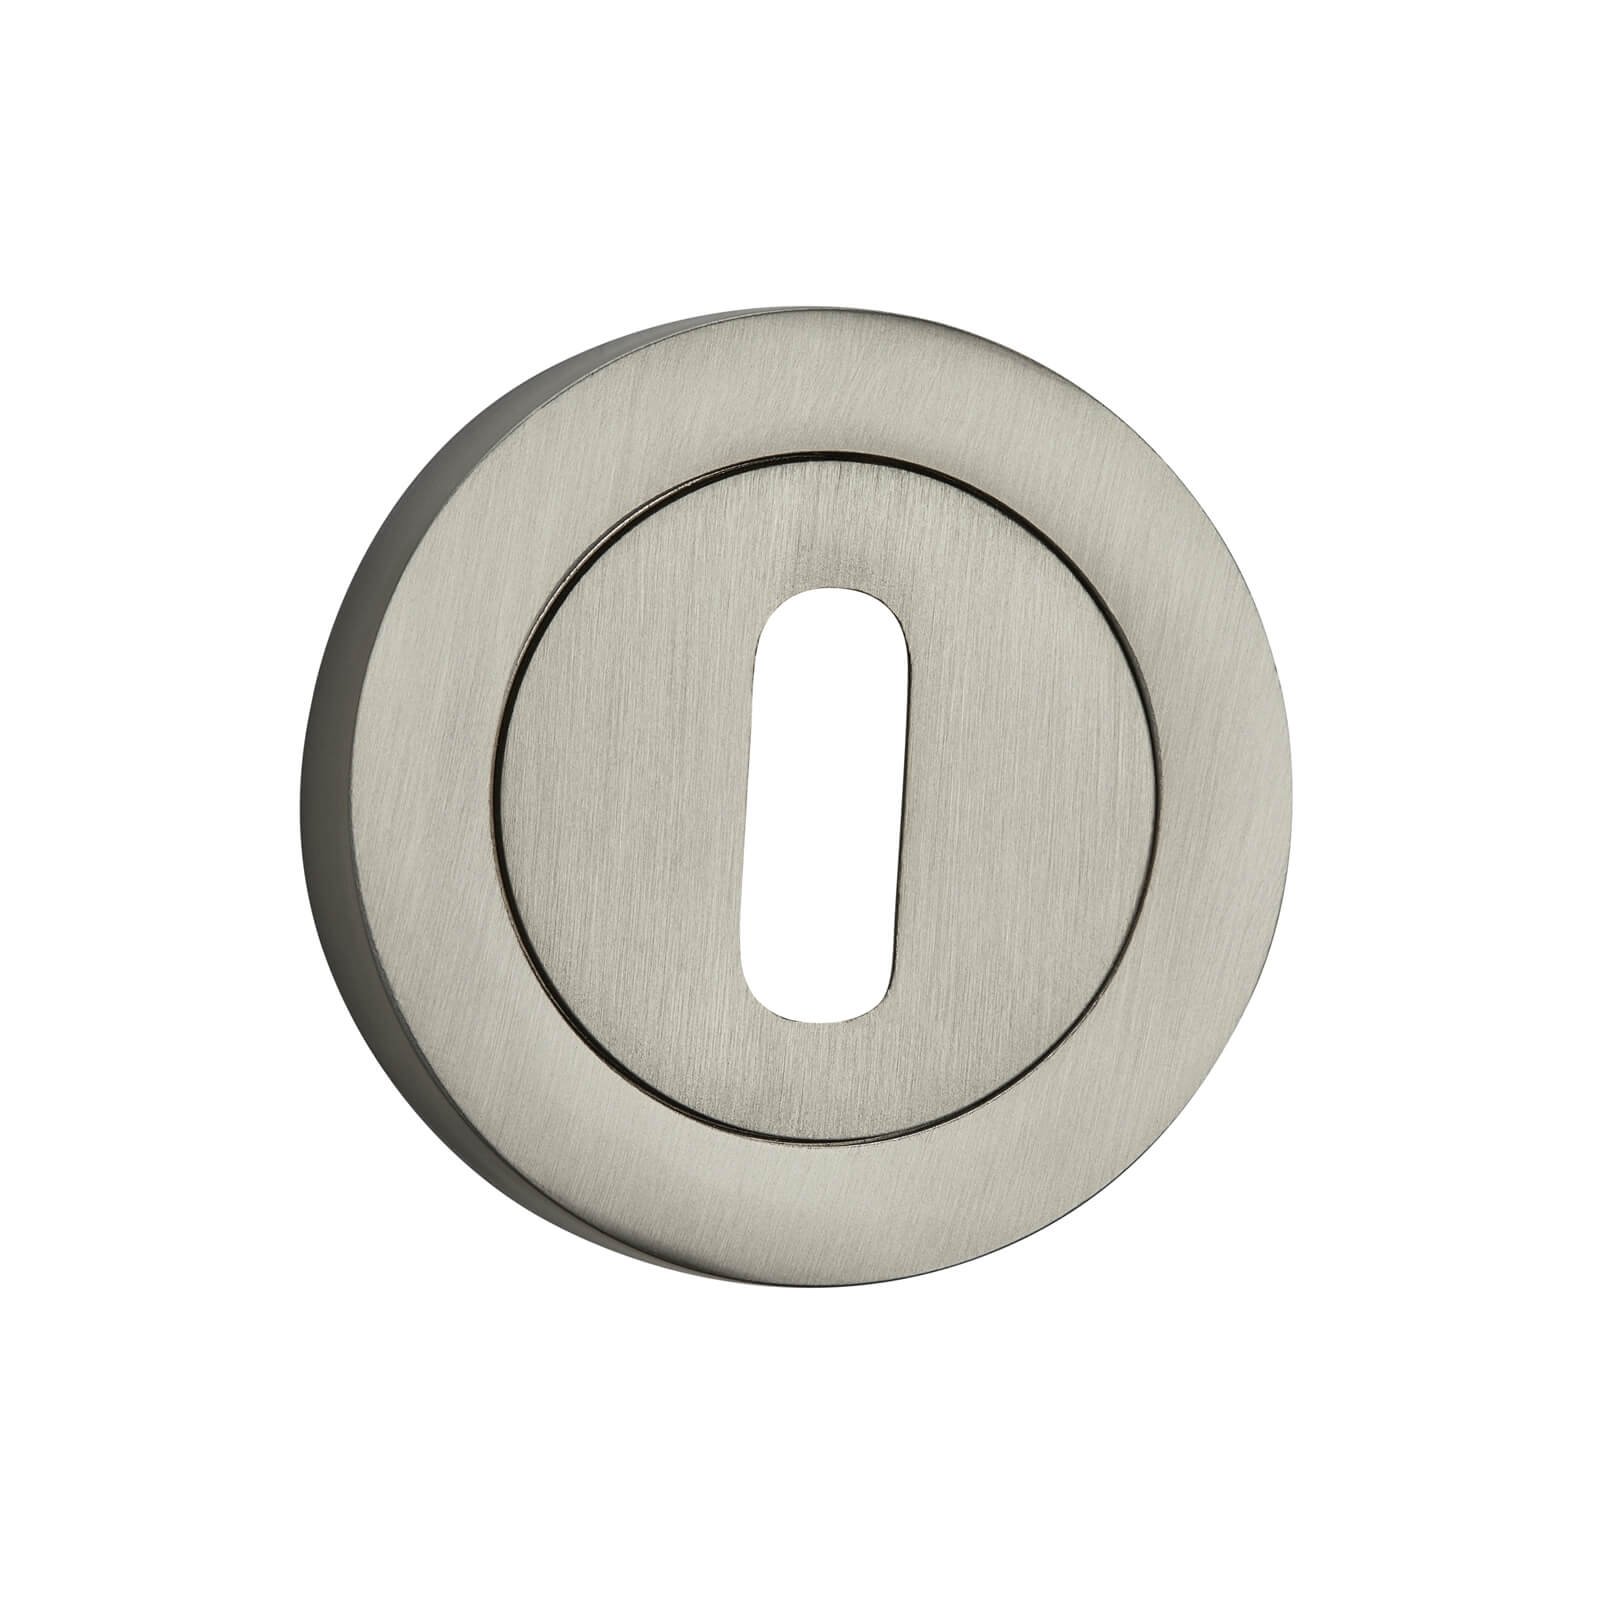 Sandleford Round Keyhole Escutcheon - Brushed Nickel